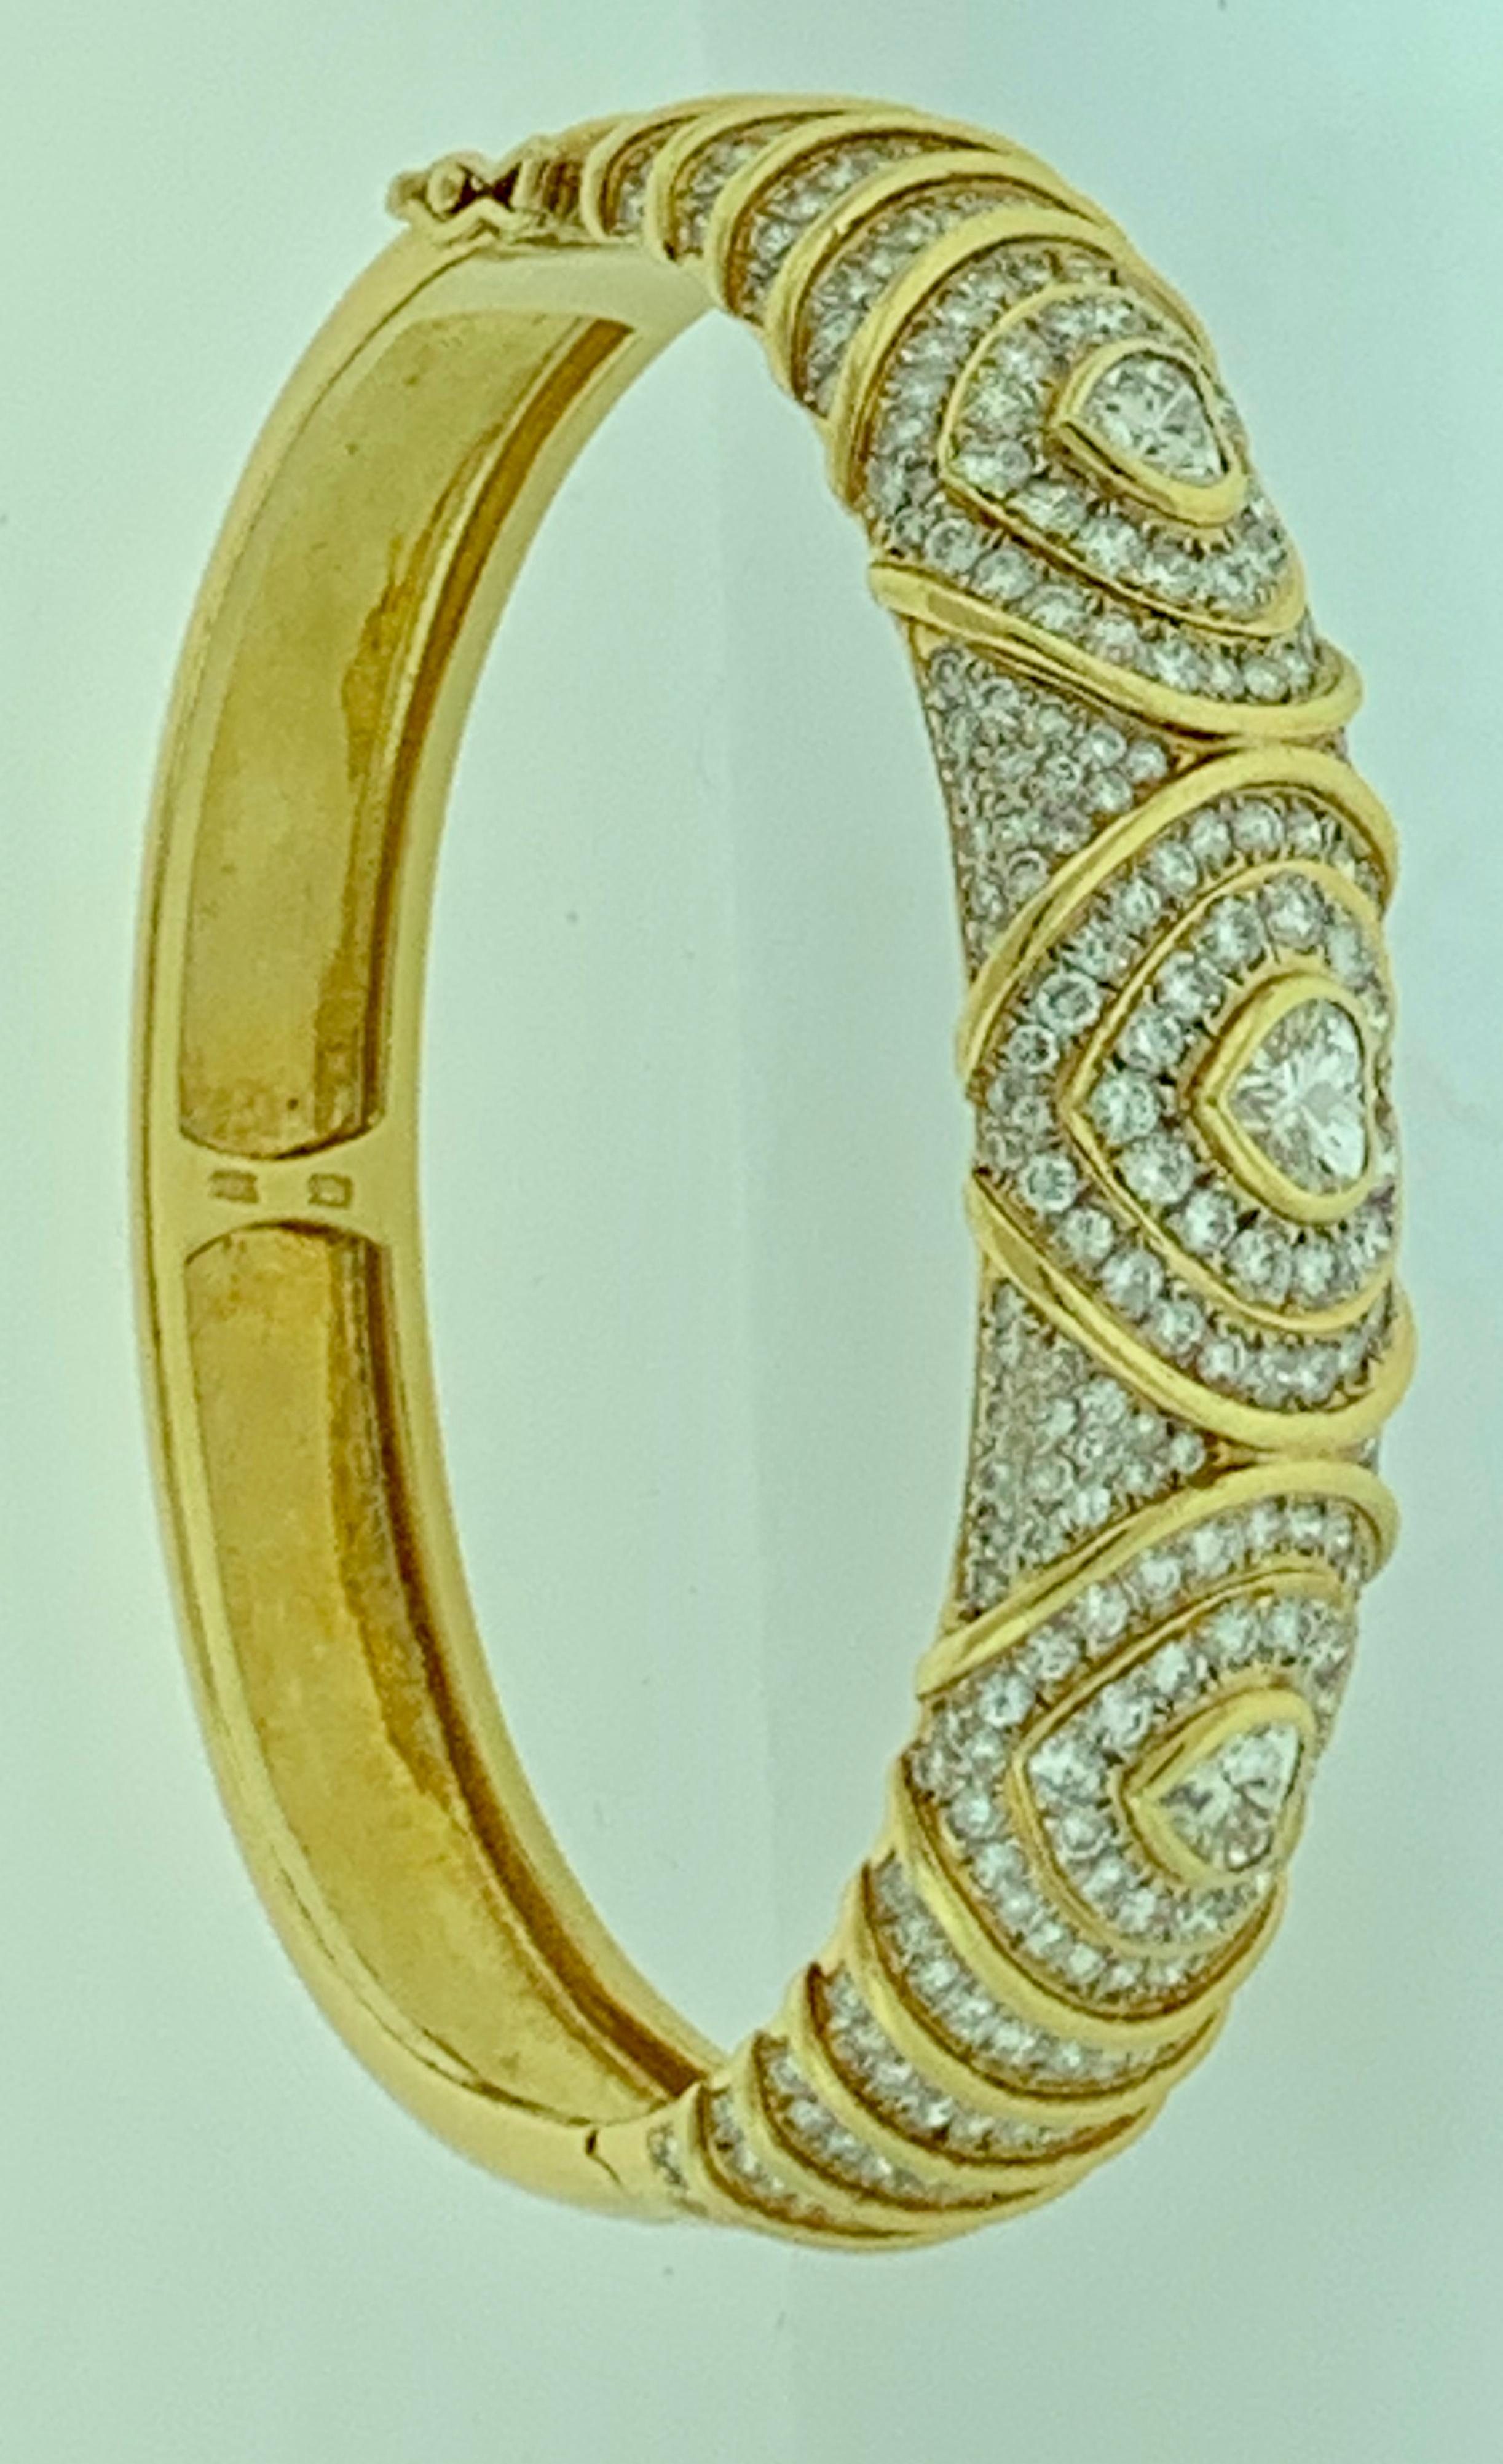 10 carat gold bracelet